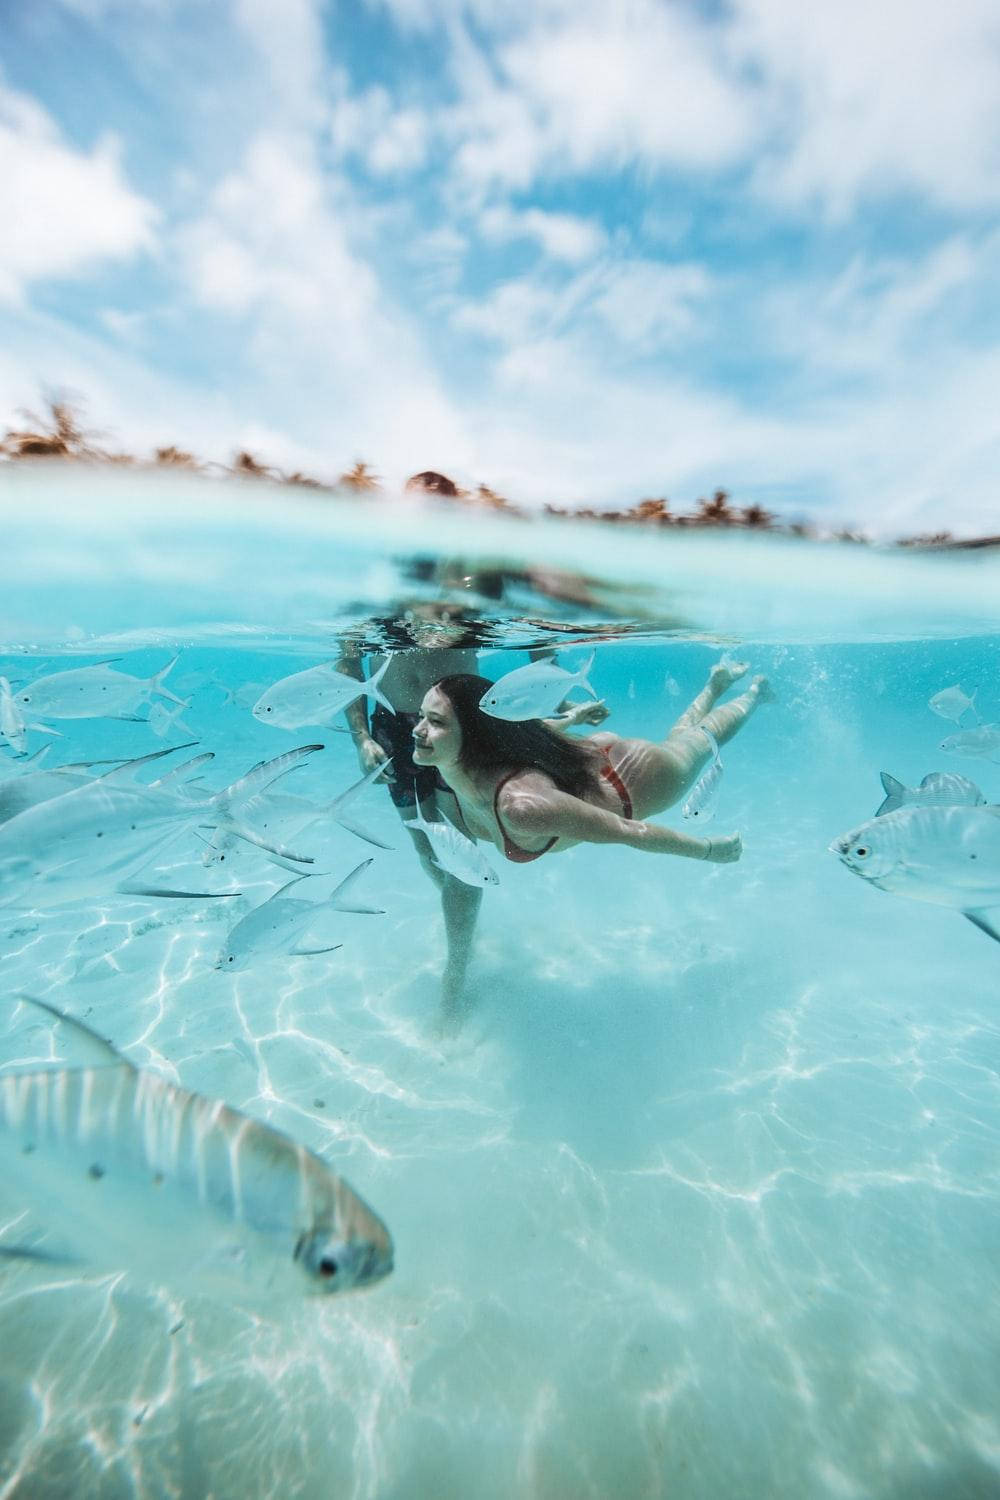 Exploring The Depths - Aesthetic Teal Underwater Scene Background